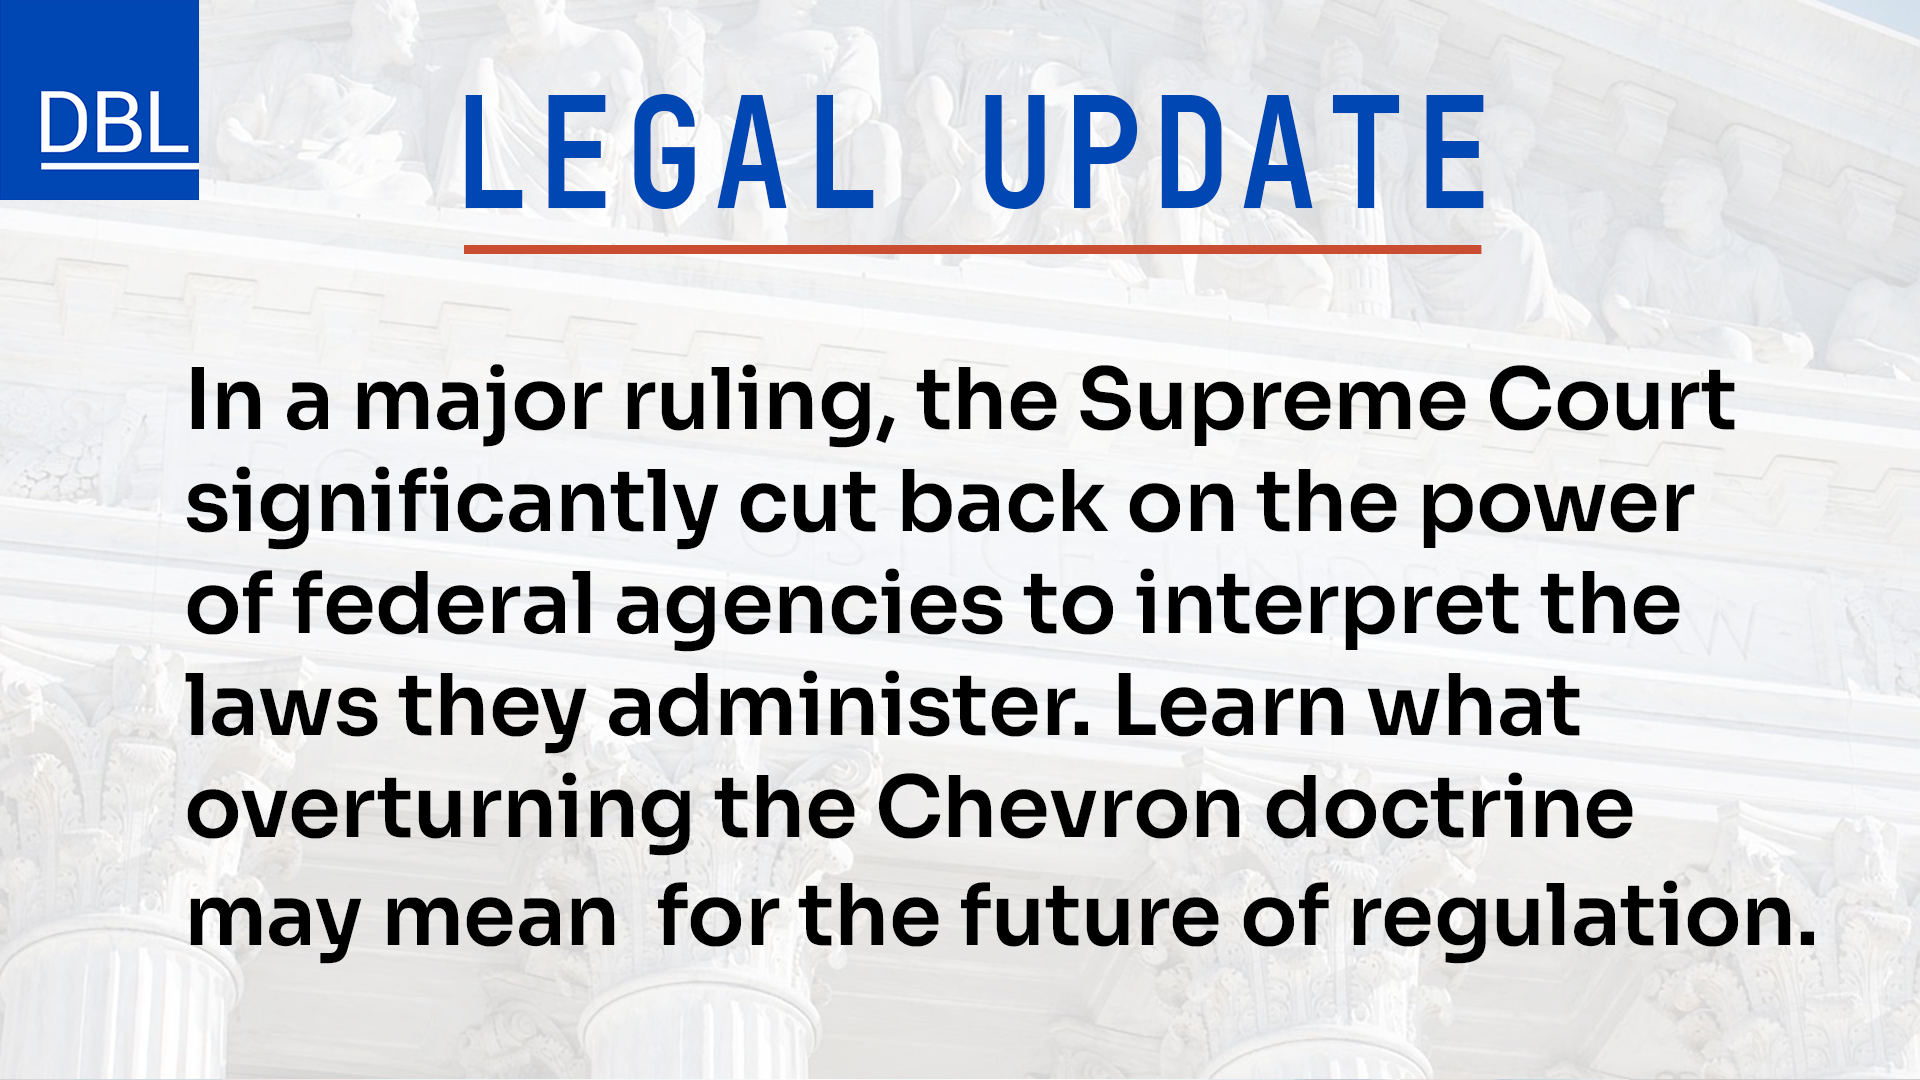 Legal Update: Supreme Court Overrules Chevron Doctrine